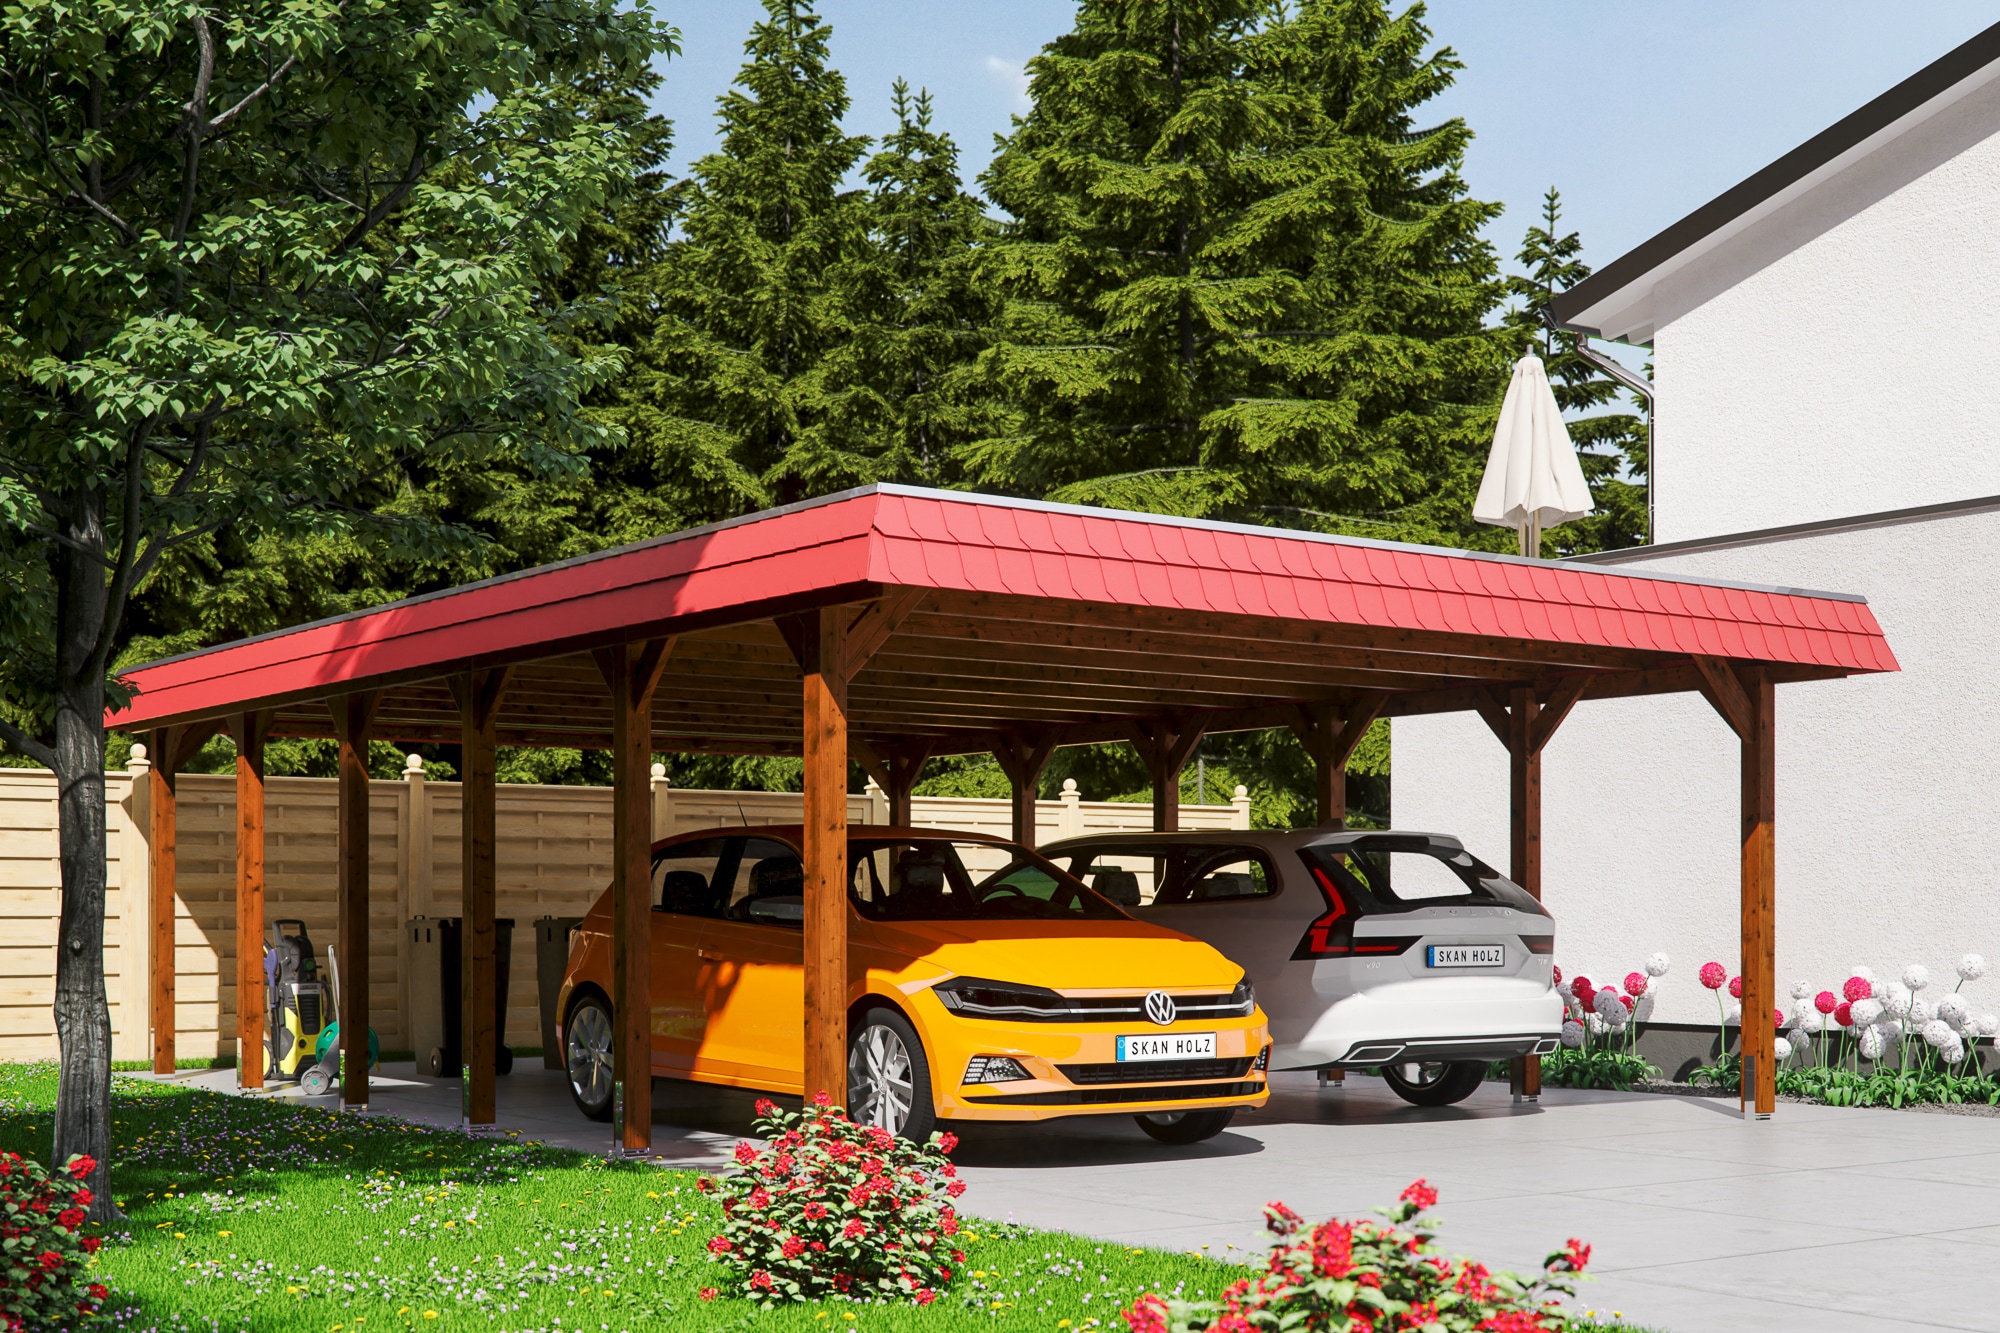 Skanholz Doppelcarport »Spreewald«, Nadelholz, 530 cm, Nussbaum, mit EPDM-Dach, rote Blende